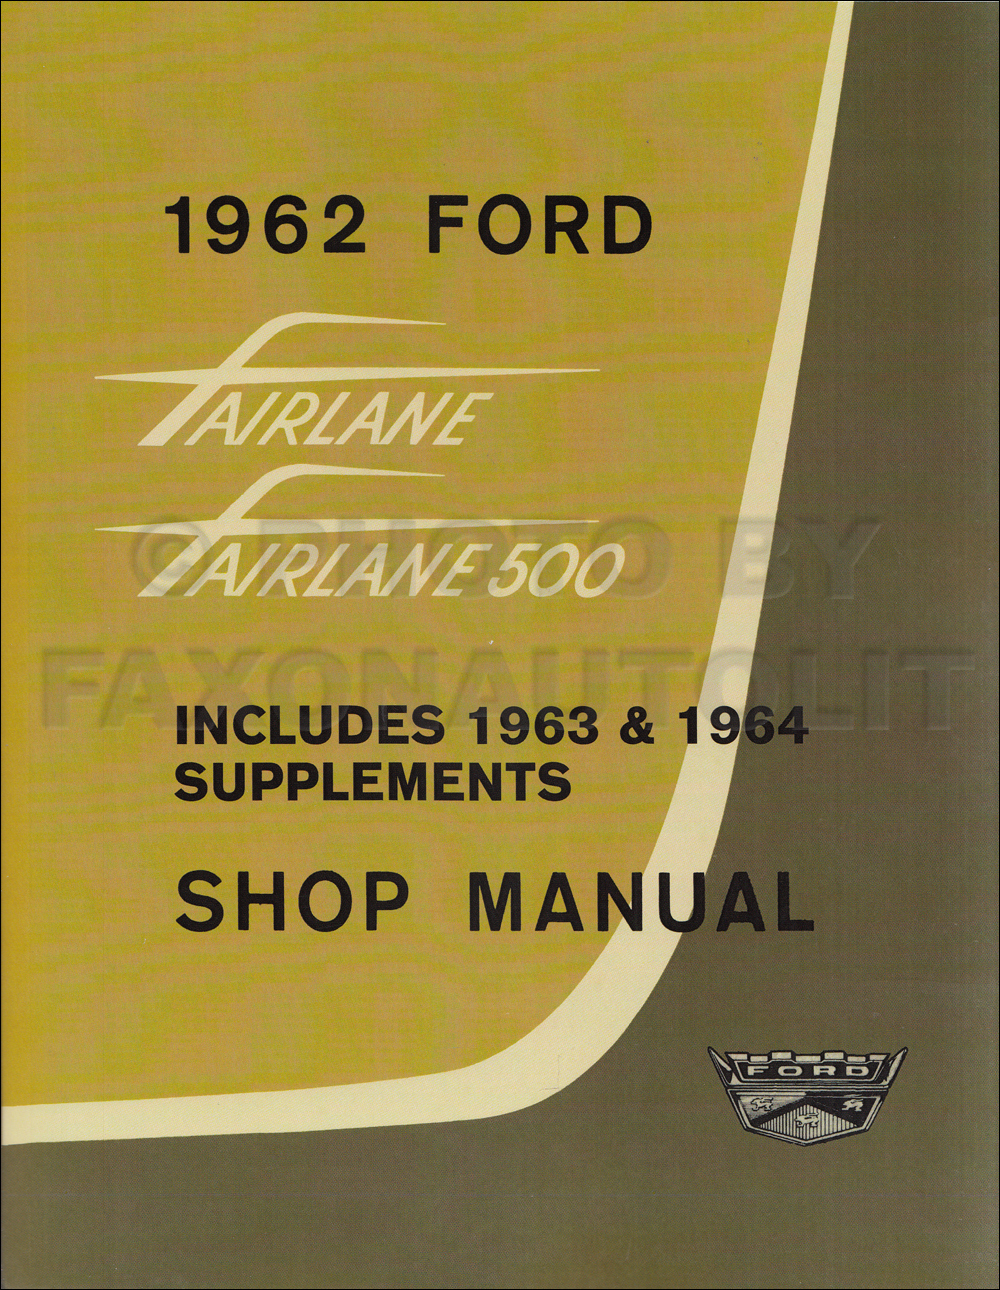 1962 Ford Fairlane Shop Manual Reprint